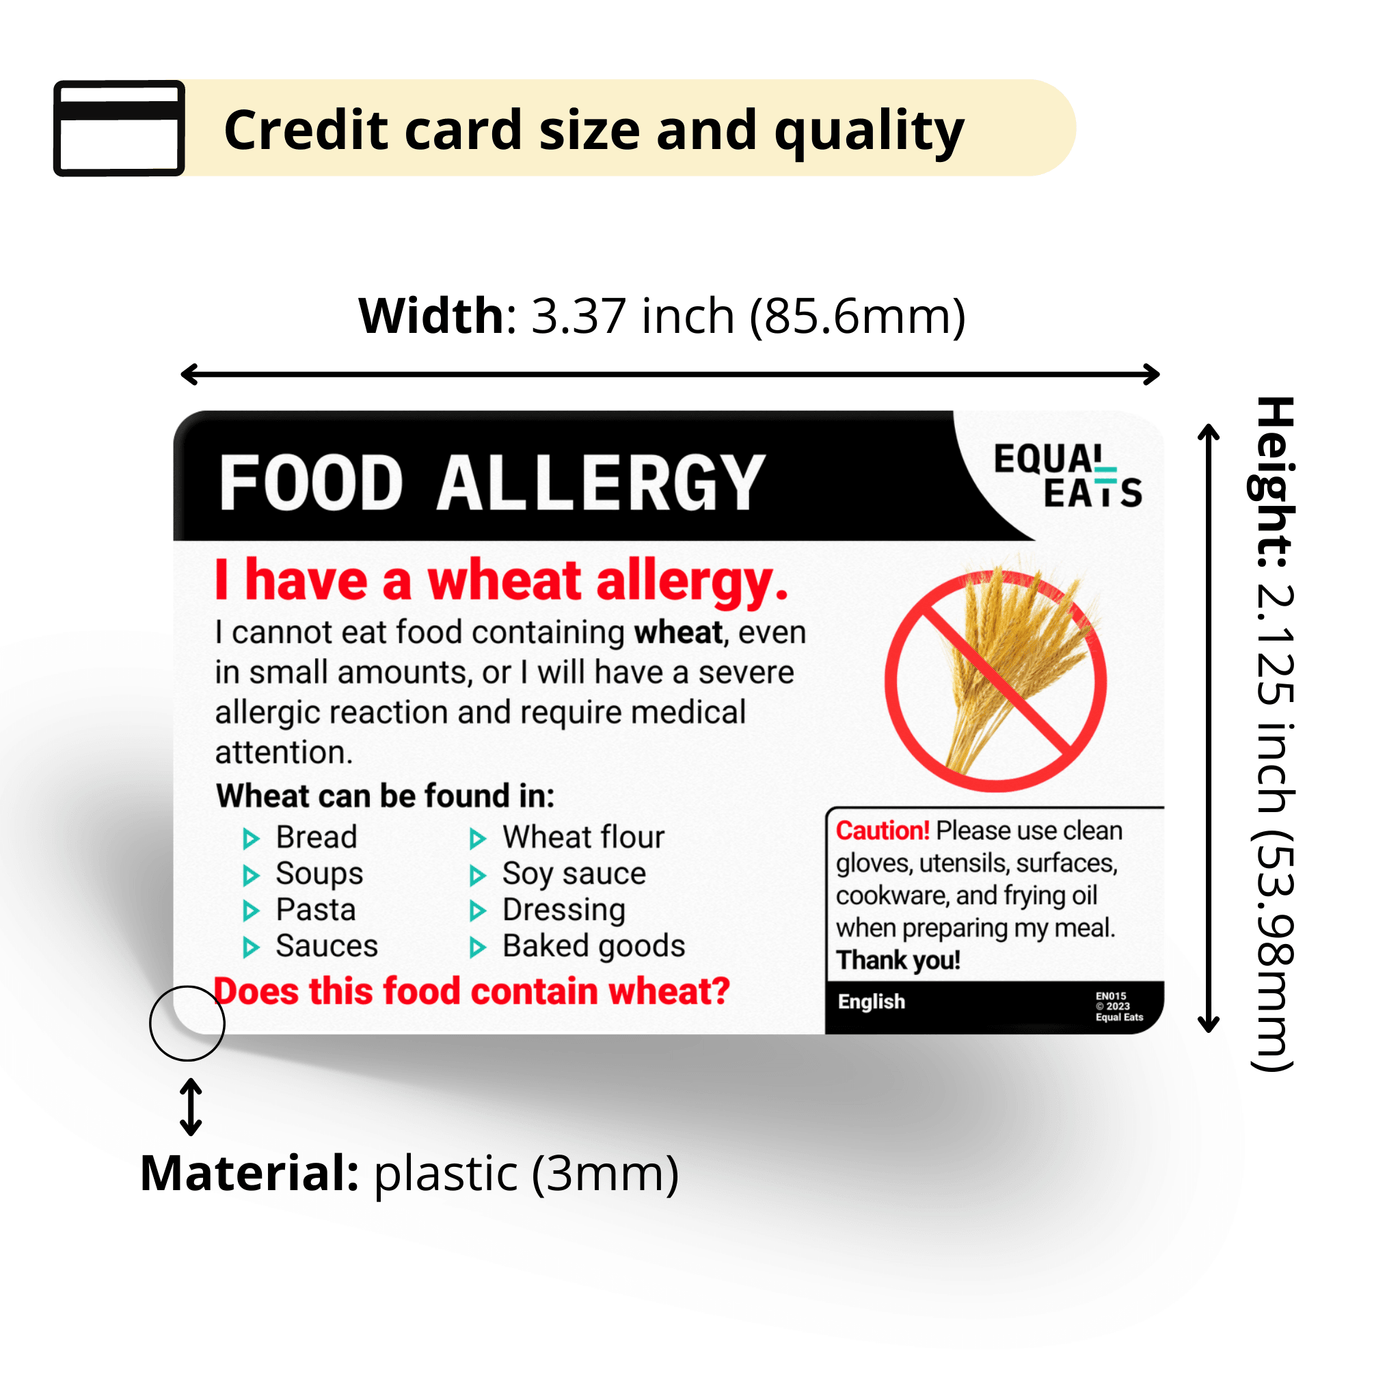 Equal Eats Wheat Allergy Translation Card